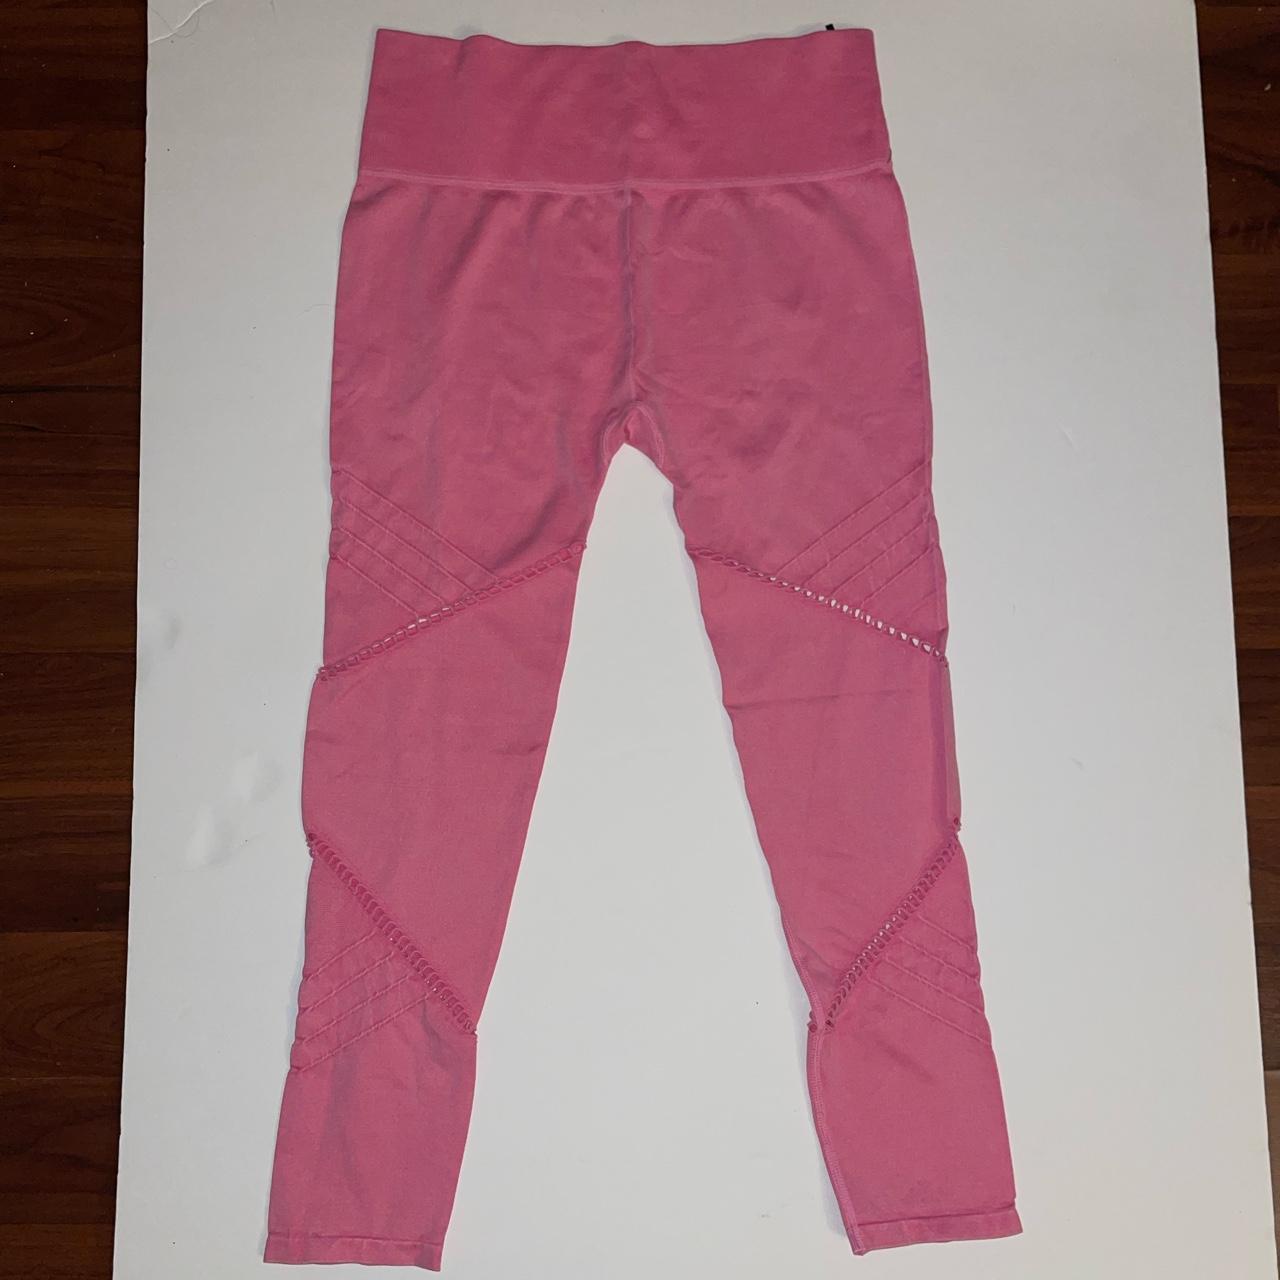 Product Image 1 - HOT PINK SEAMLESS LEGGING

#pink #gymset